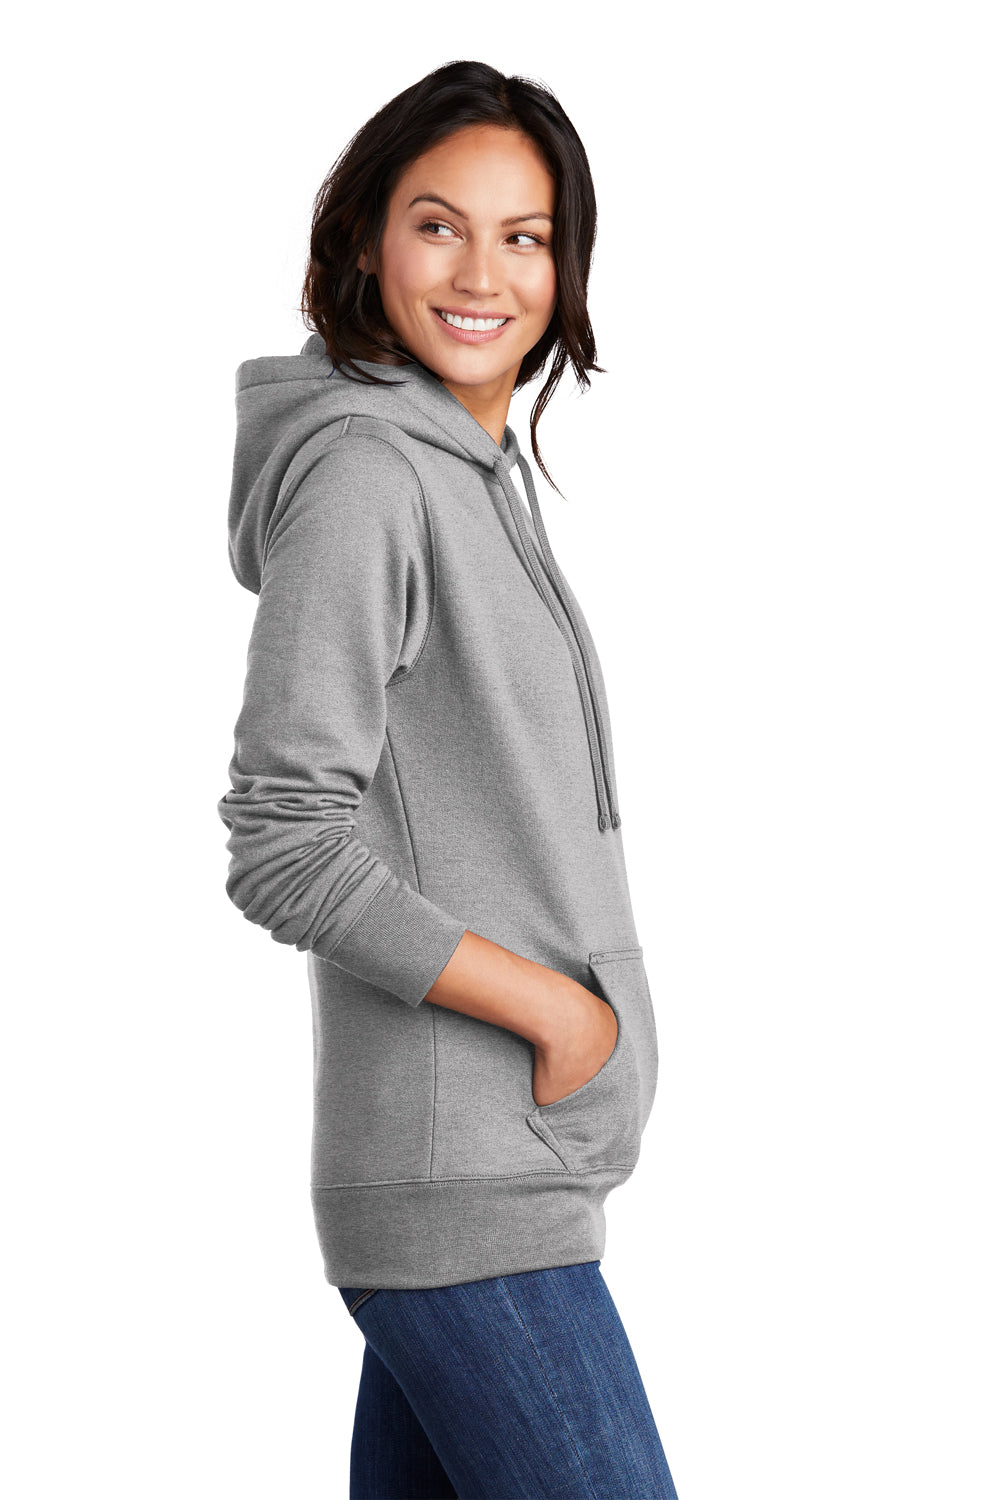 Port & Company Womens Core Fleece Hooded Sweatshirt Hoodie Heather Grey Side